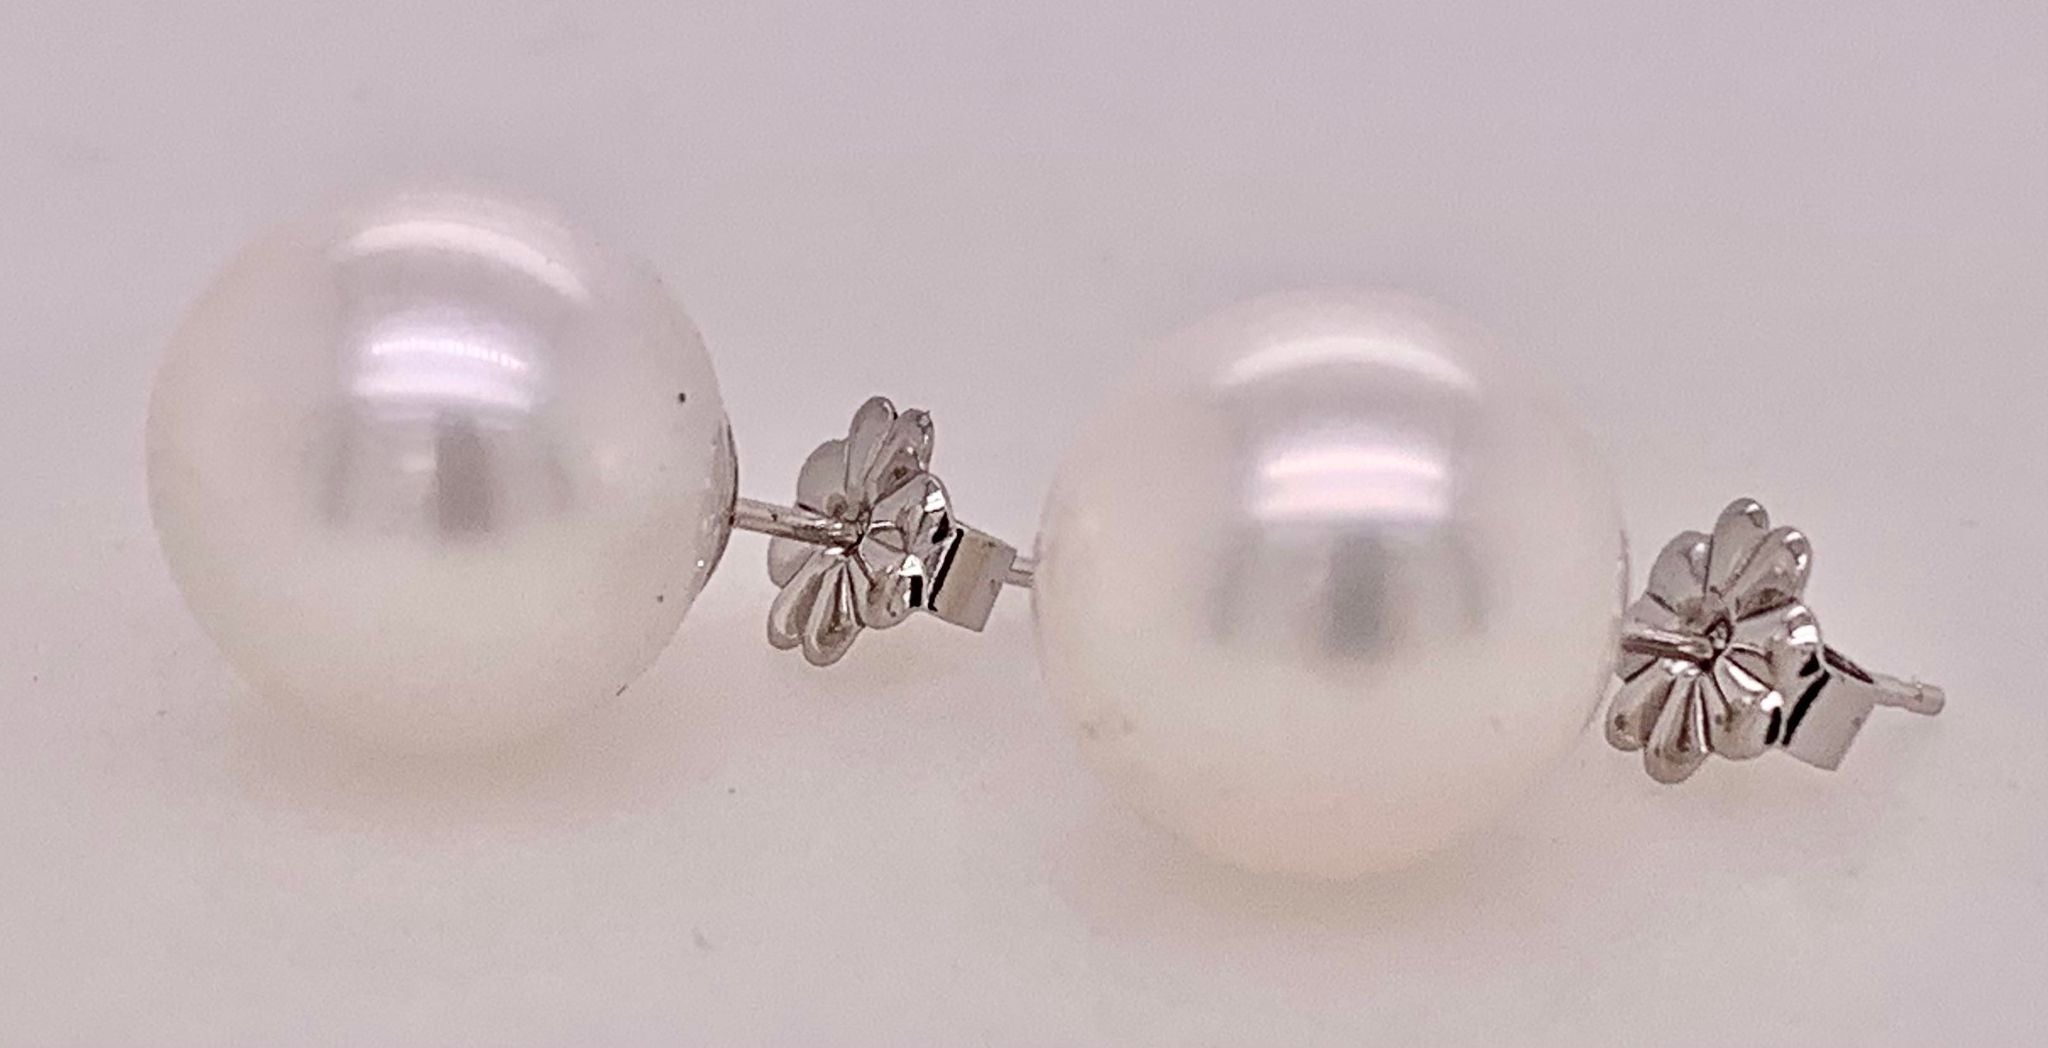 14K Freshwater Pearl Earrings